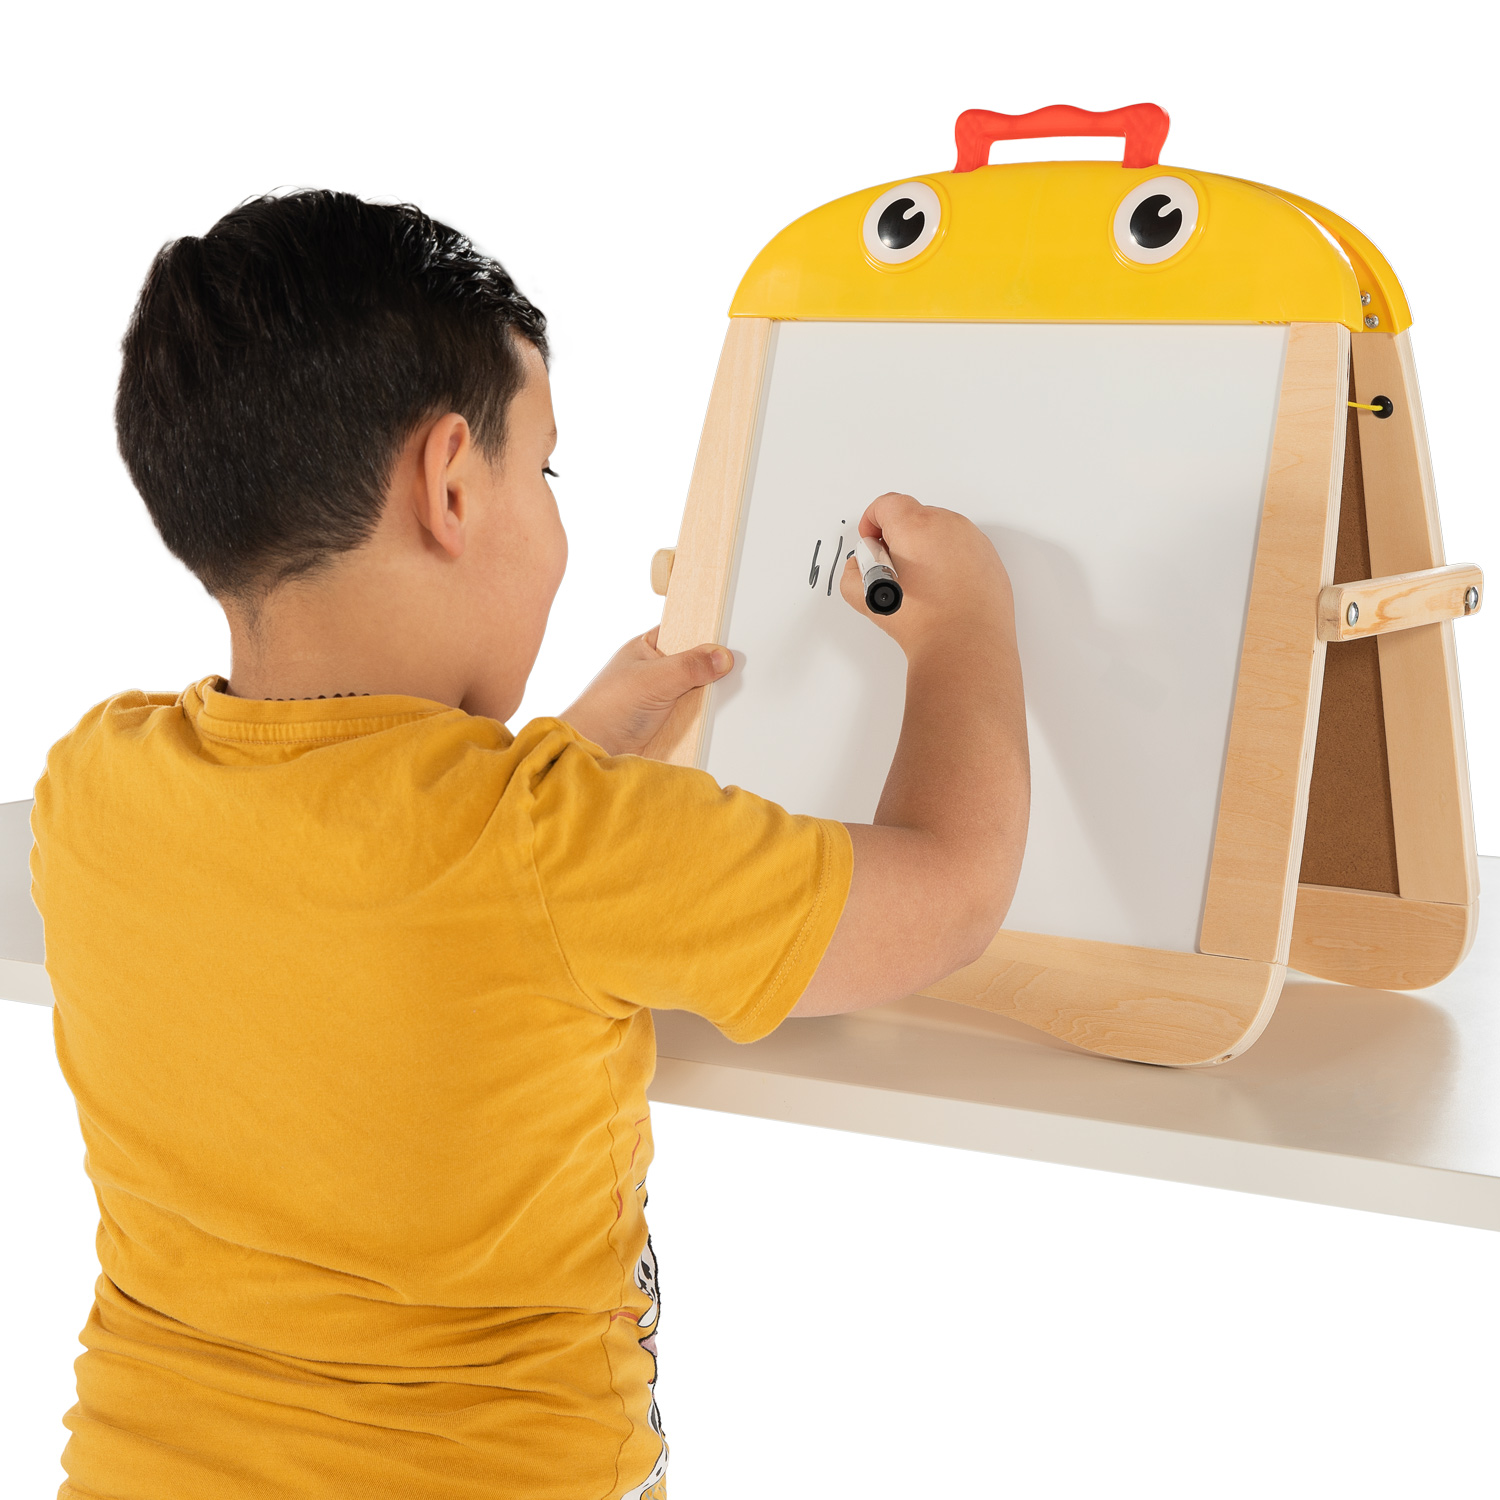 Tragbares Kinder-Whiteboard